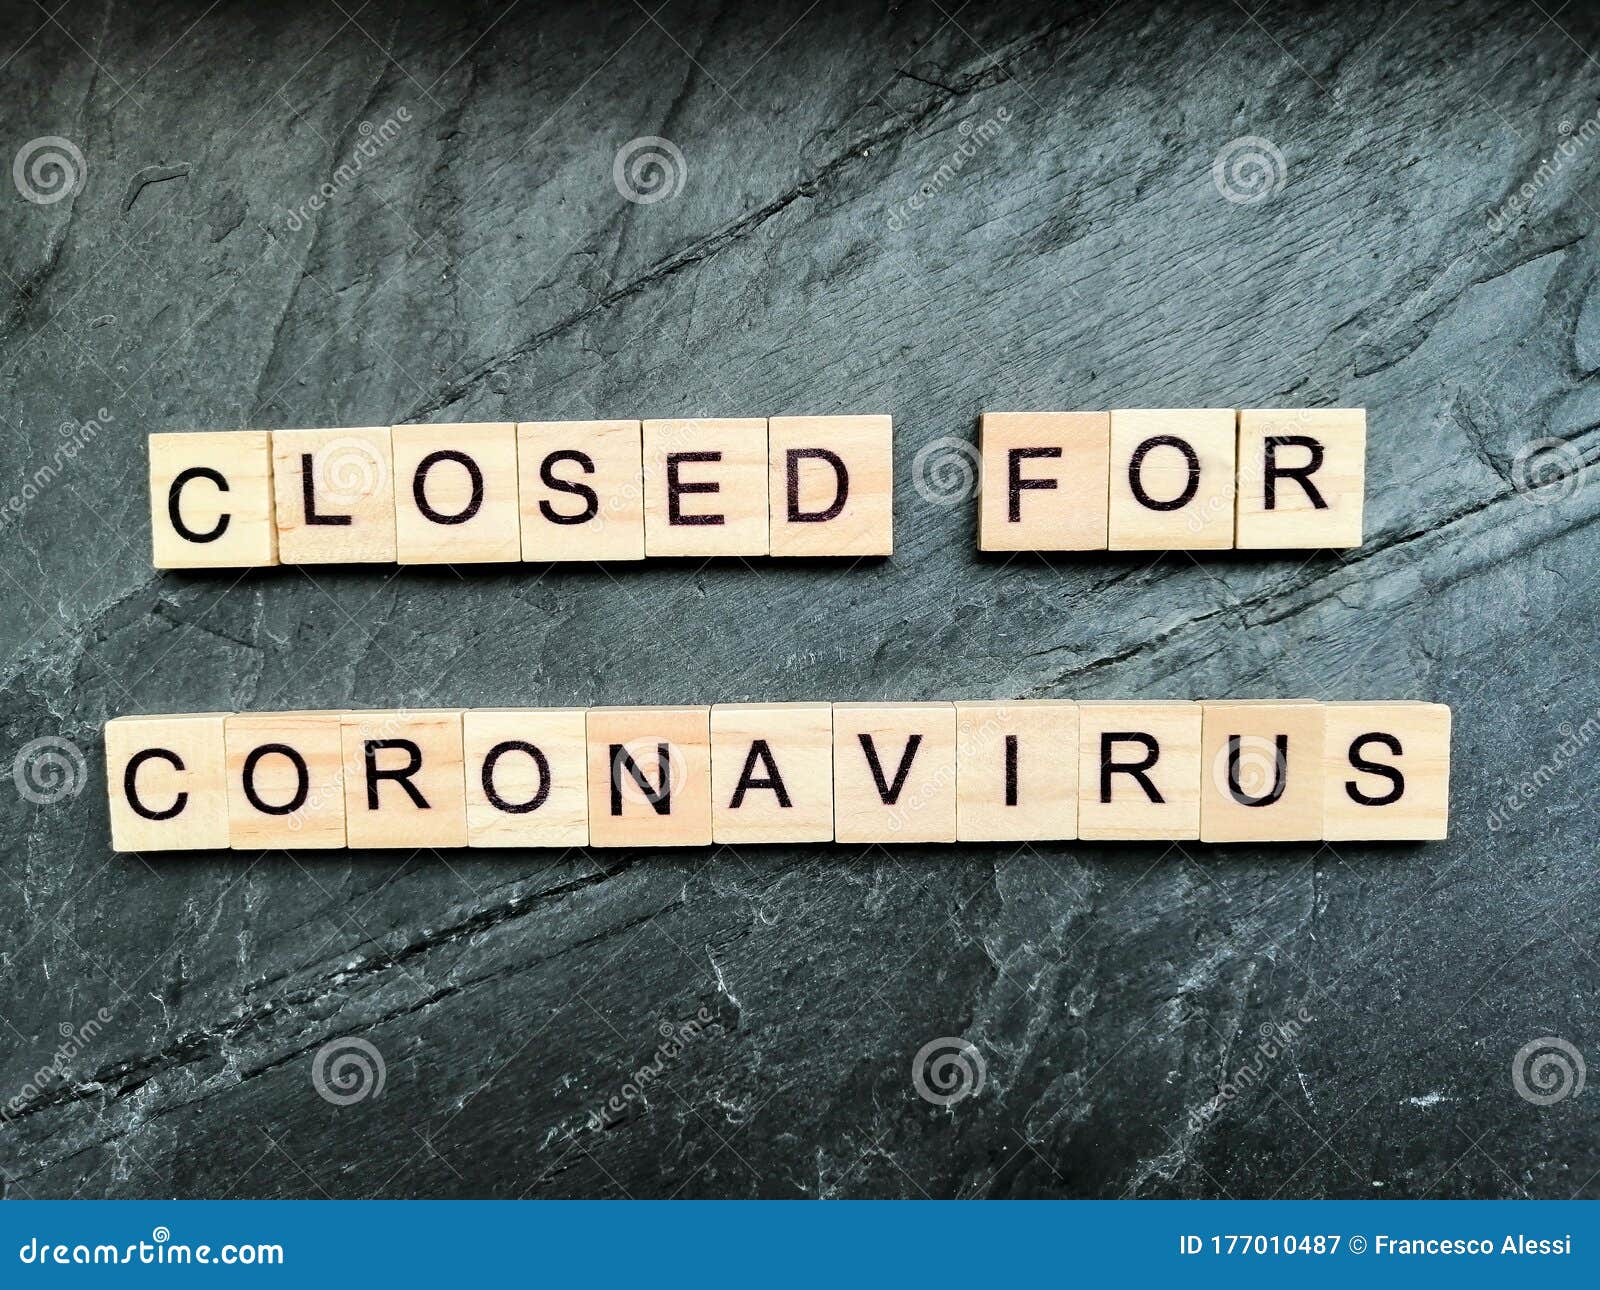 closed for coronavirus